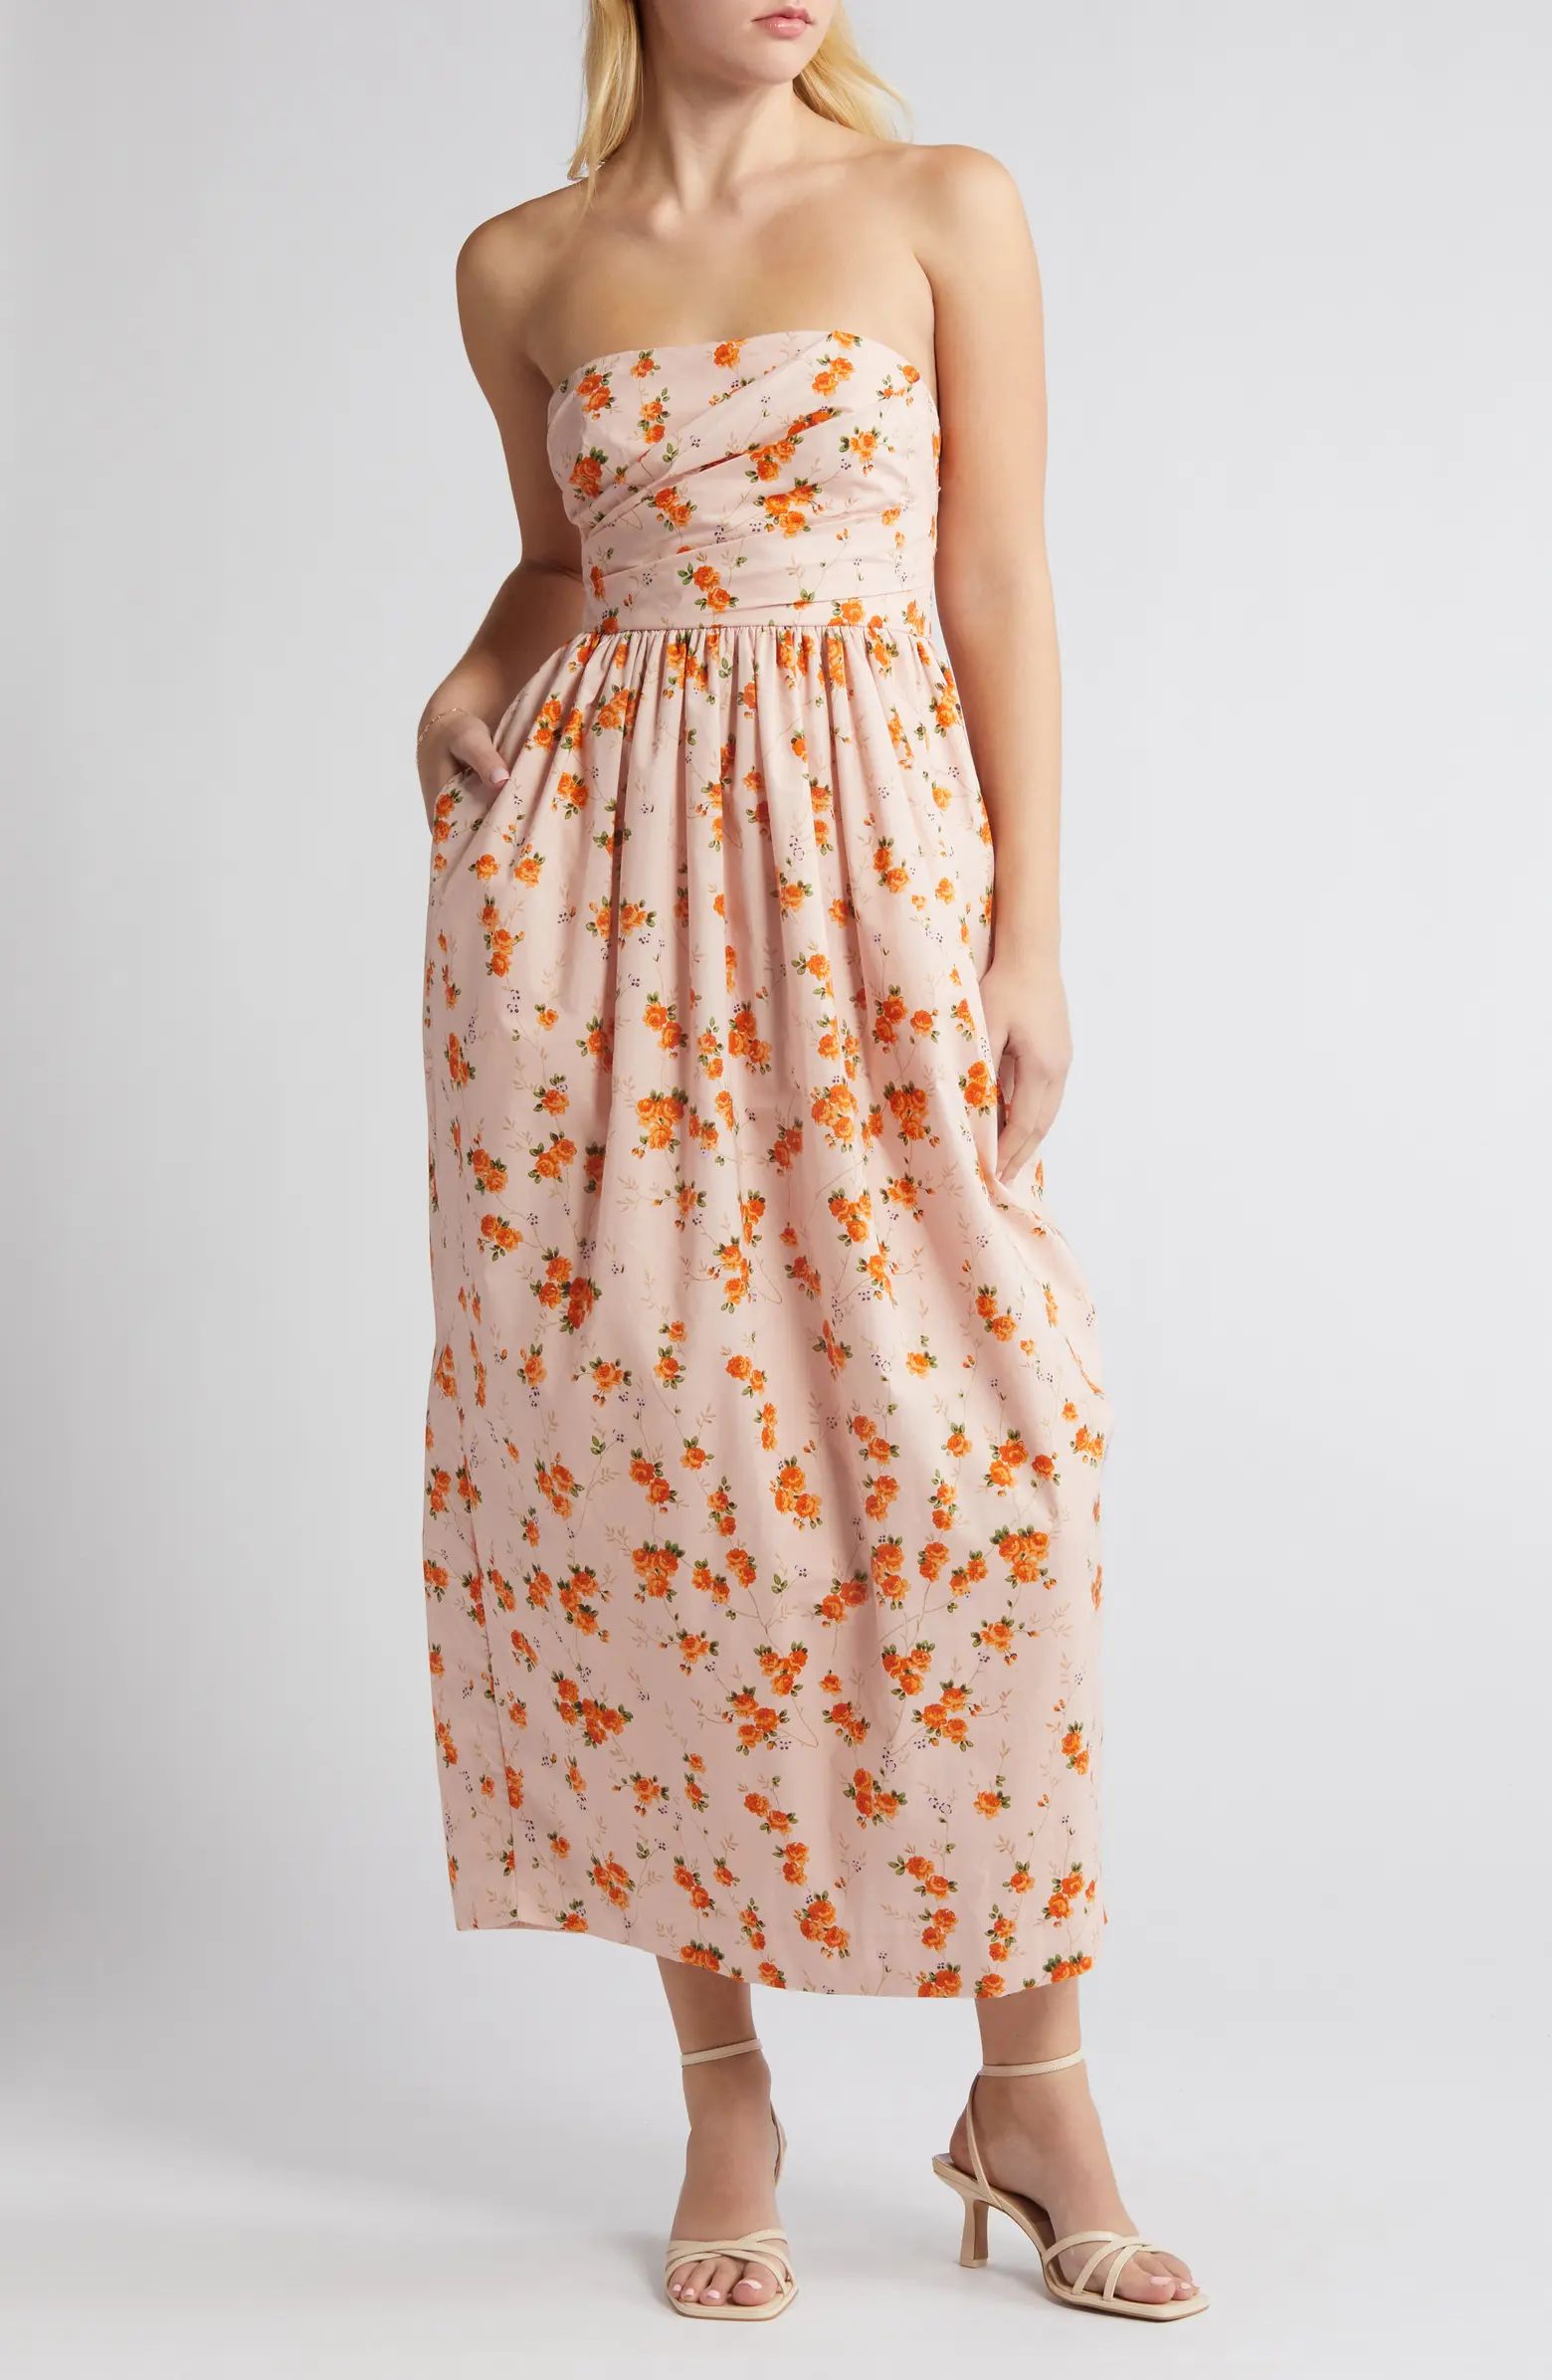 Luxie Floral Strapless Cotton Dress | Nordstrom